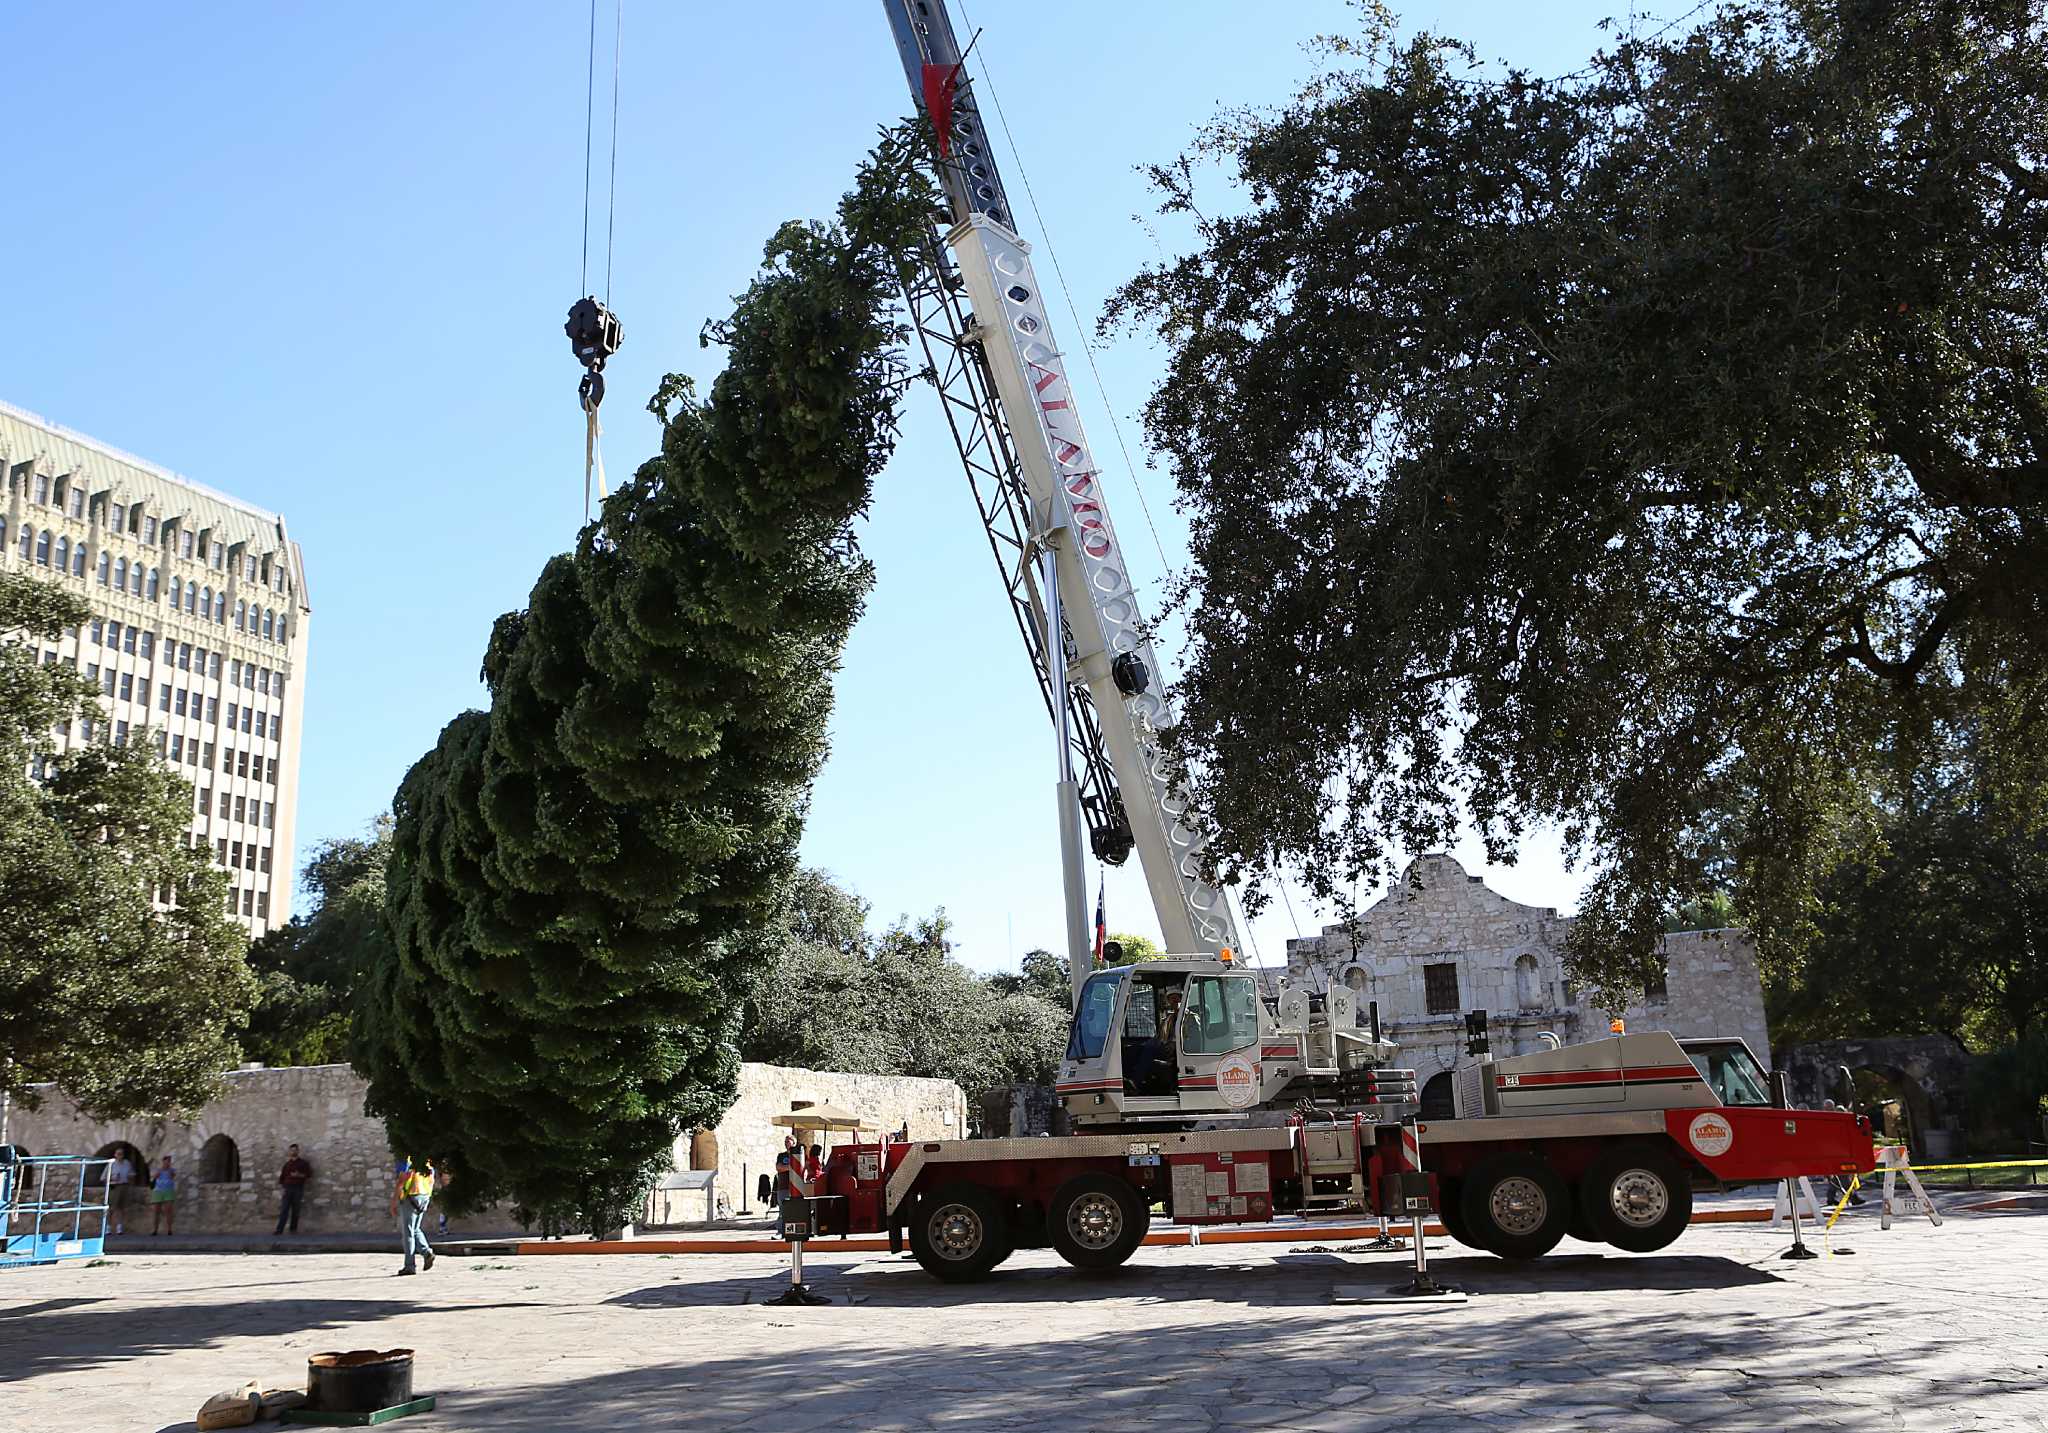 Photos: 55-foot Christmas tree erected at Alamo Plaza - San Antonio Express-News2048 x 1433